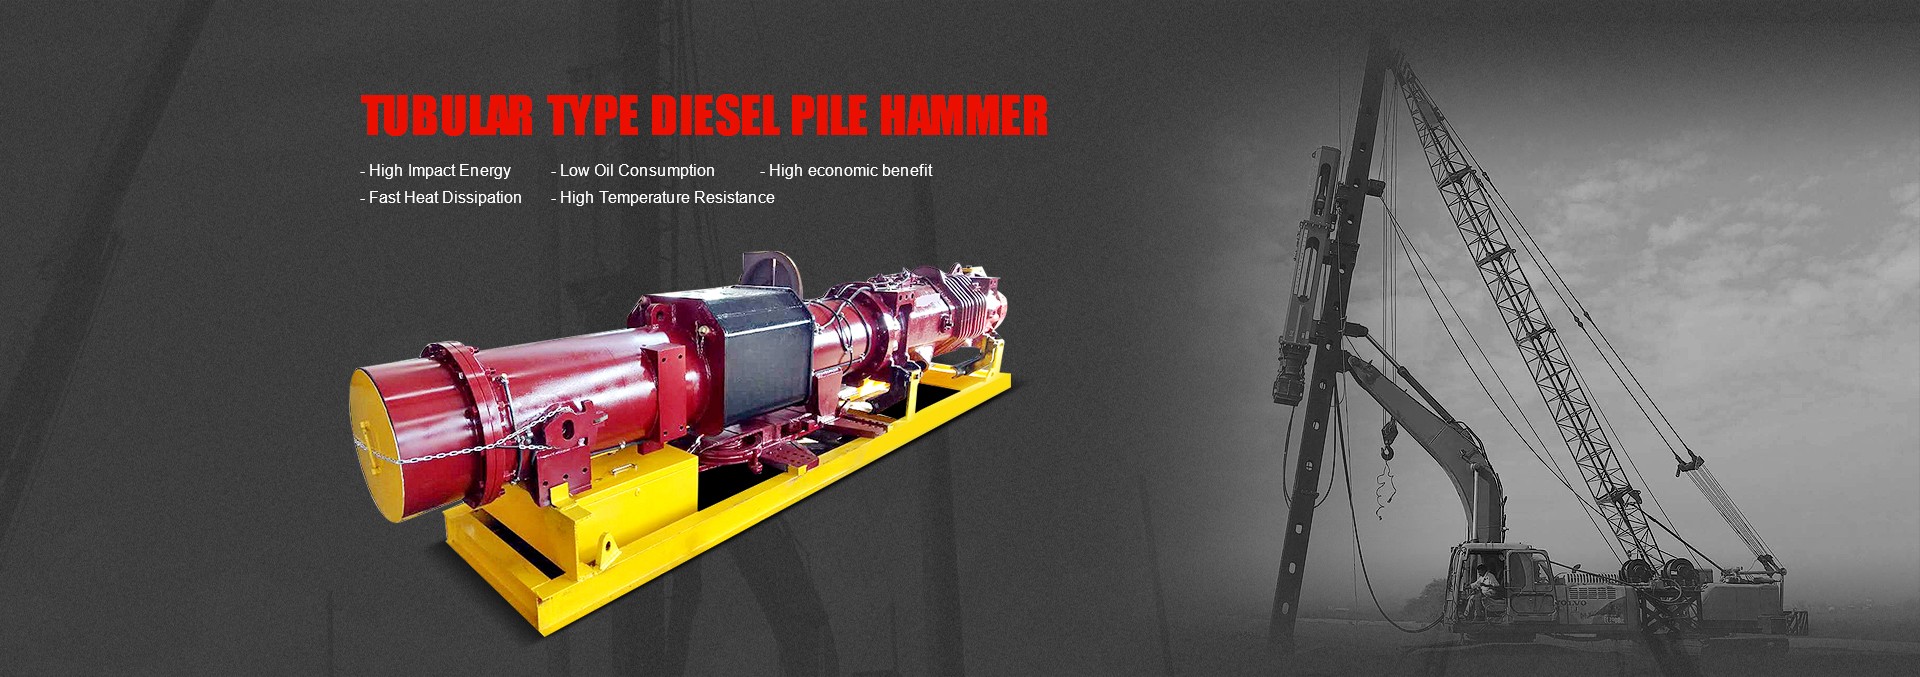 Tubular Type Diesel Pile Hammer